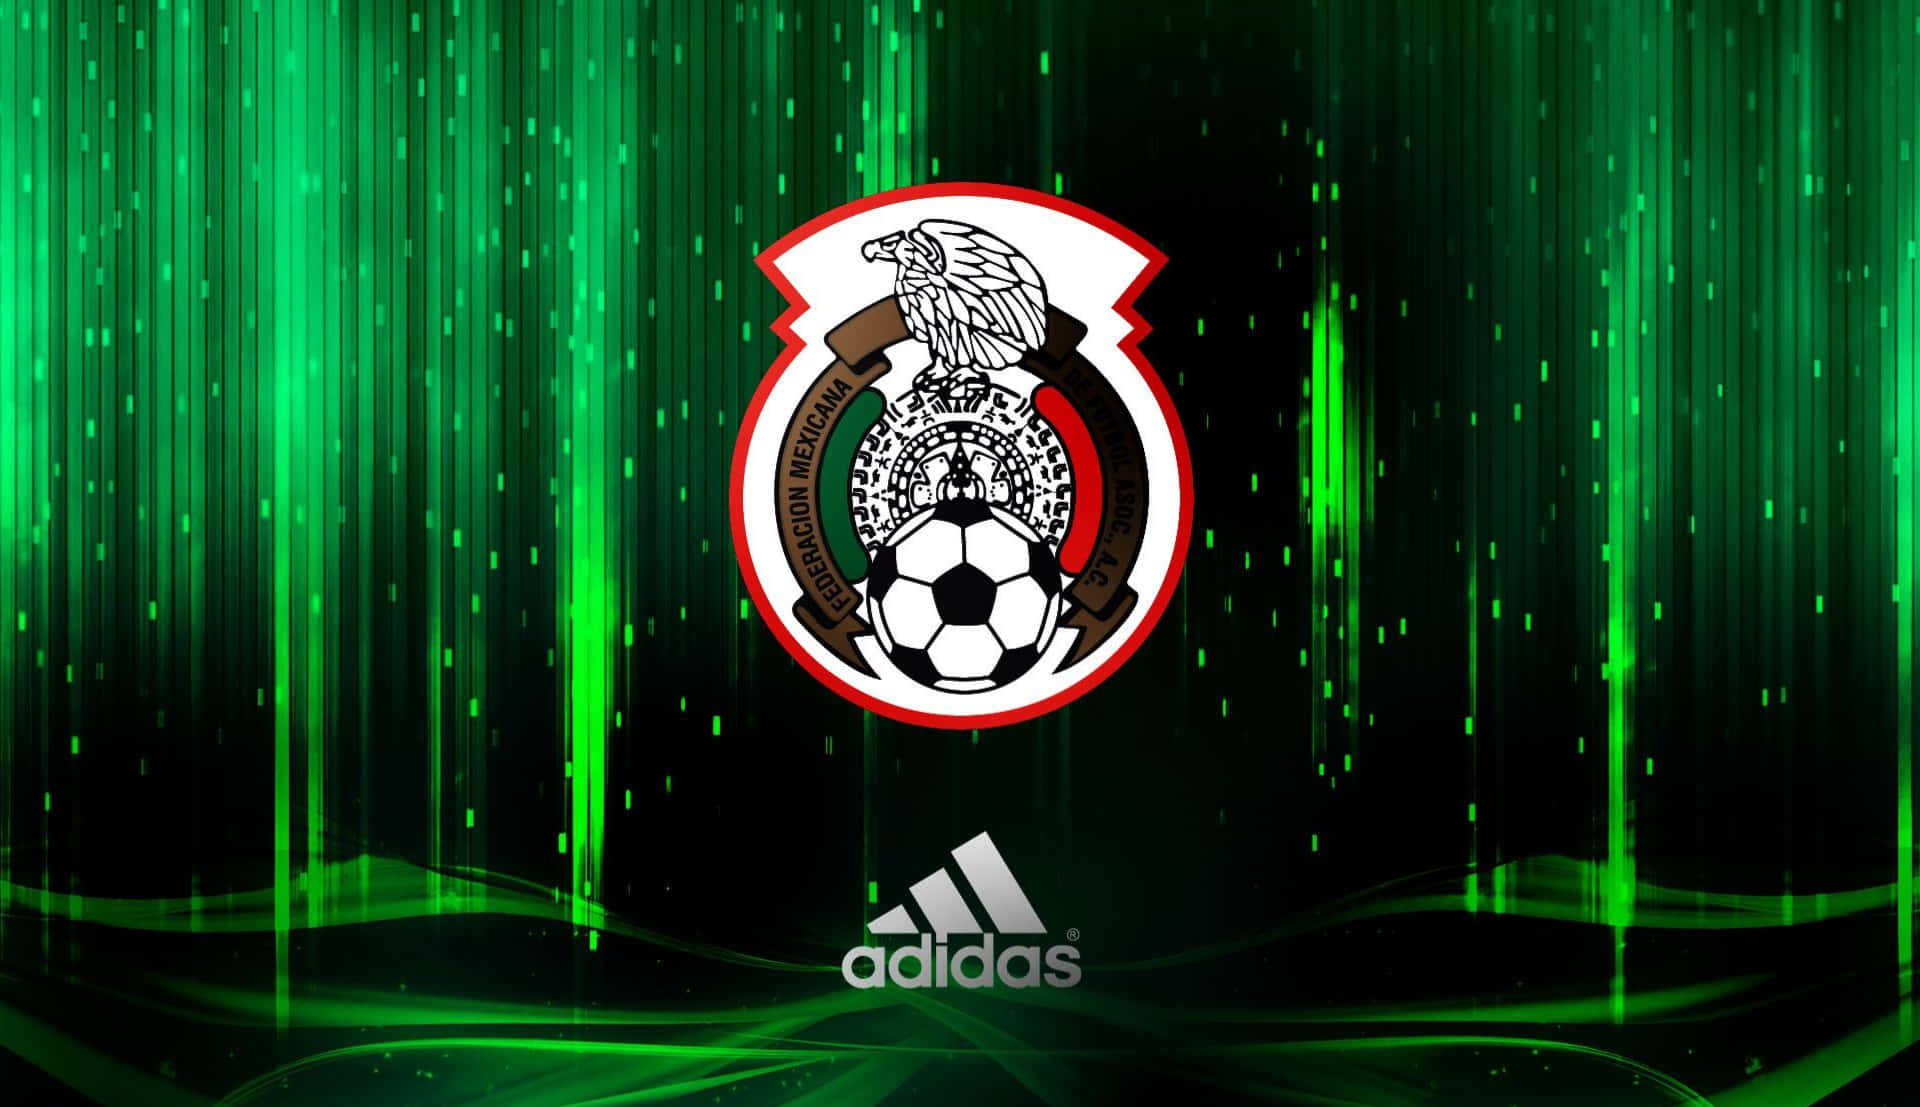 HD wallpaper Soccer Mexico National Football Team Emblem Logo   Wallpaper Flare